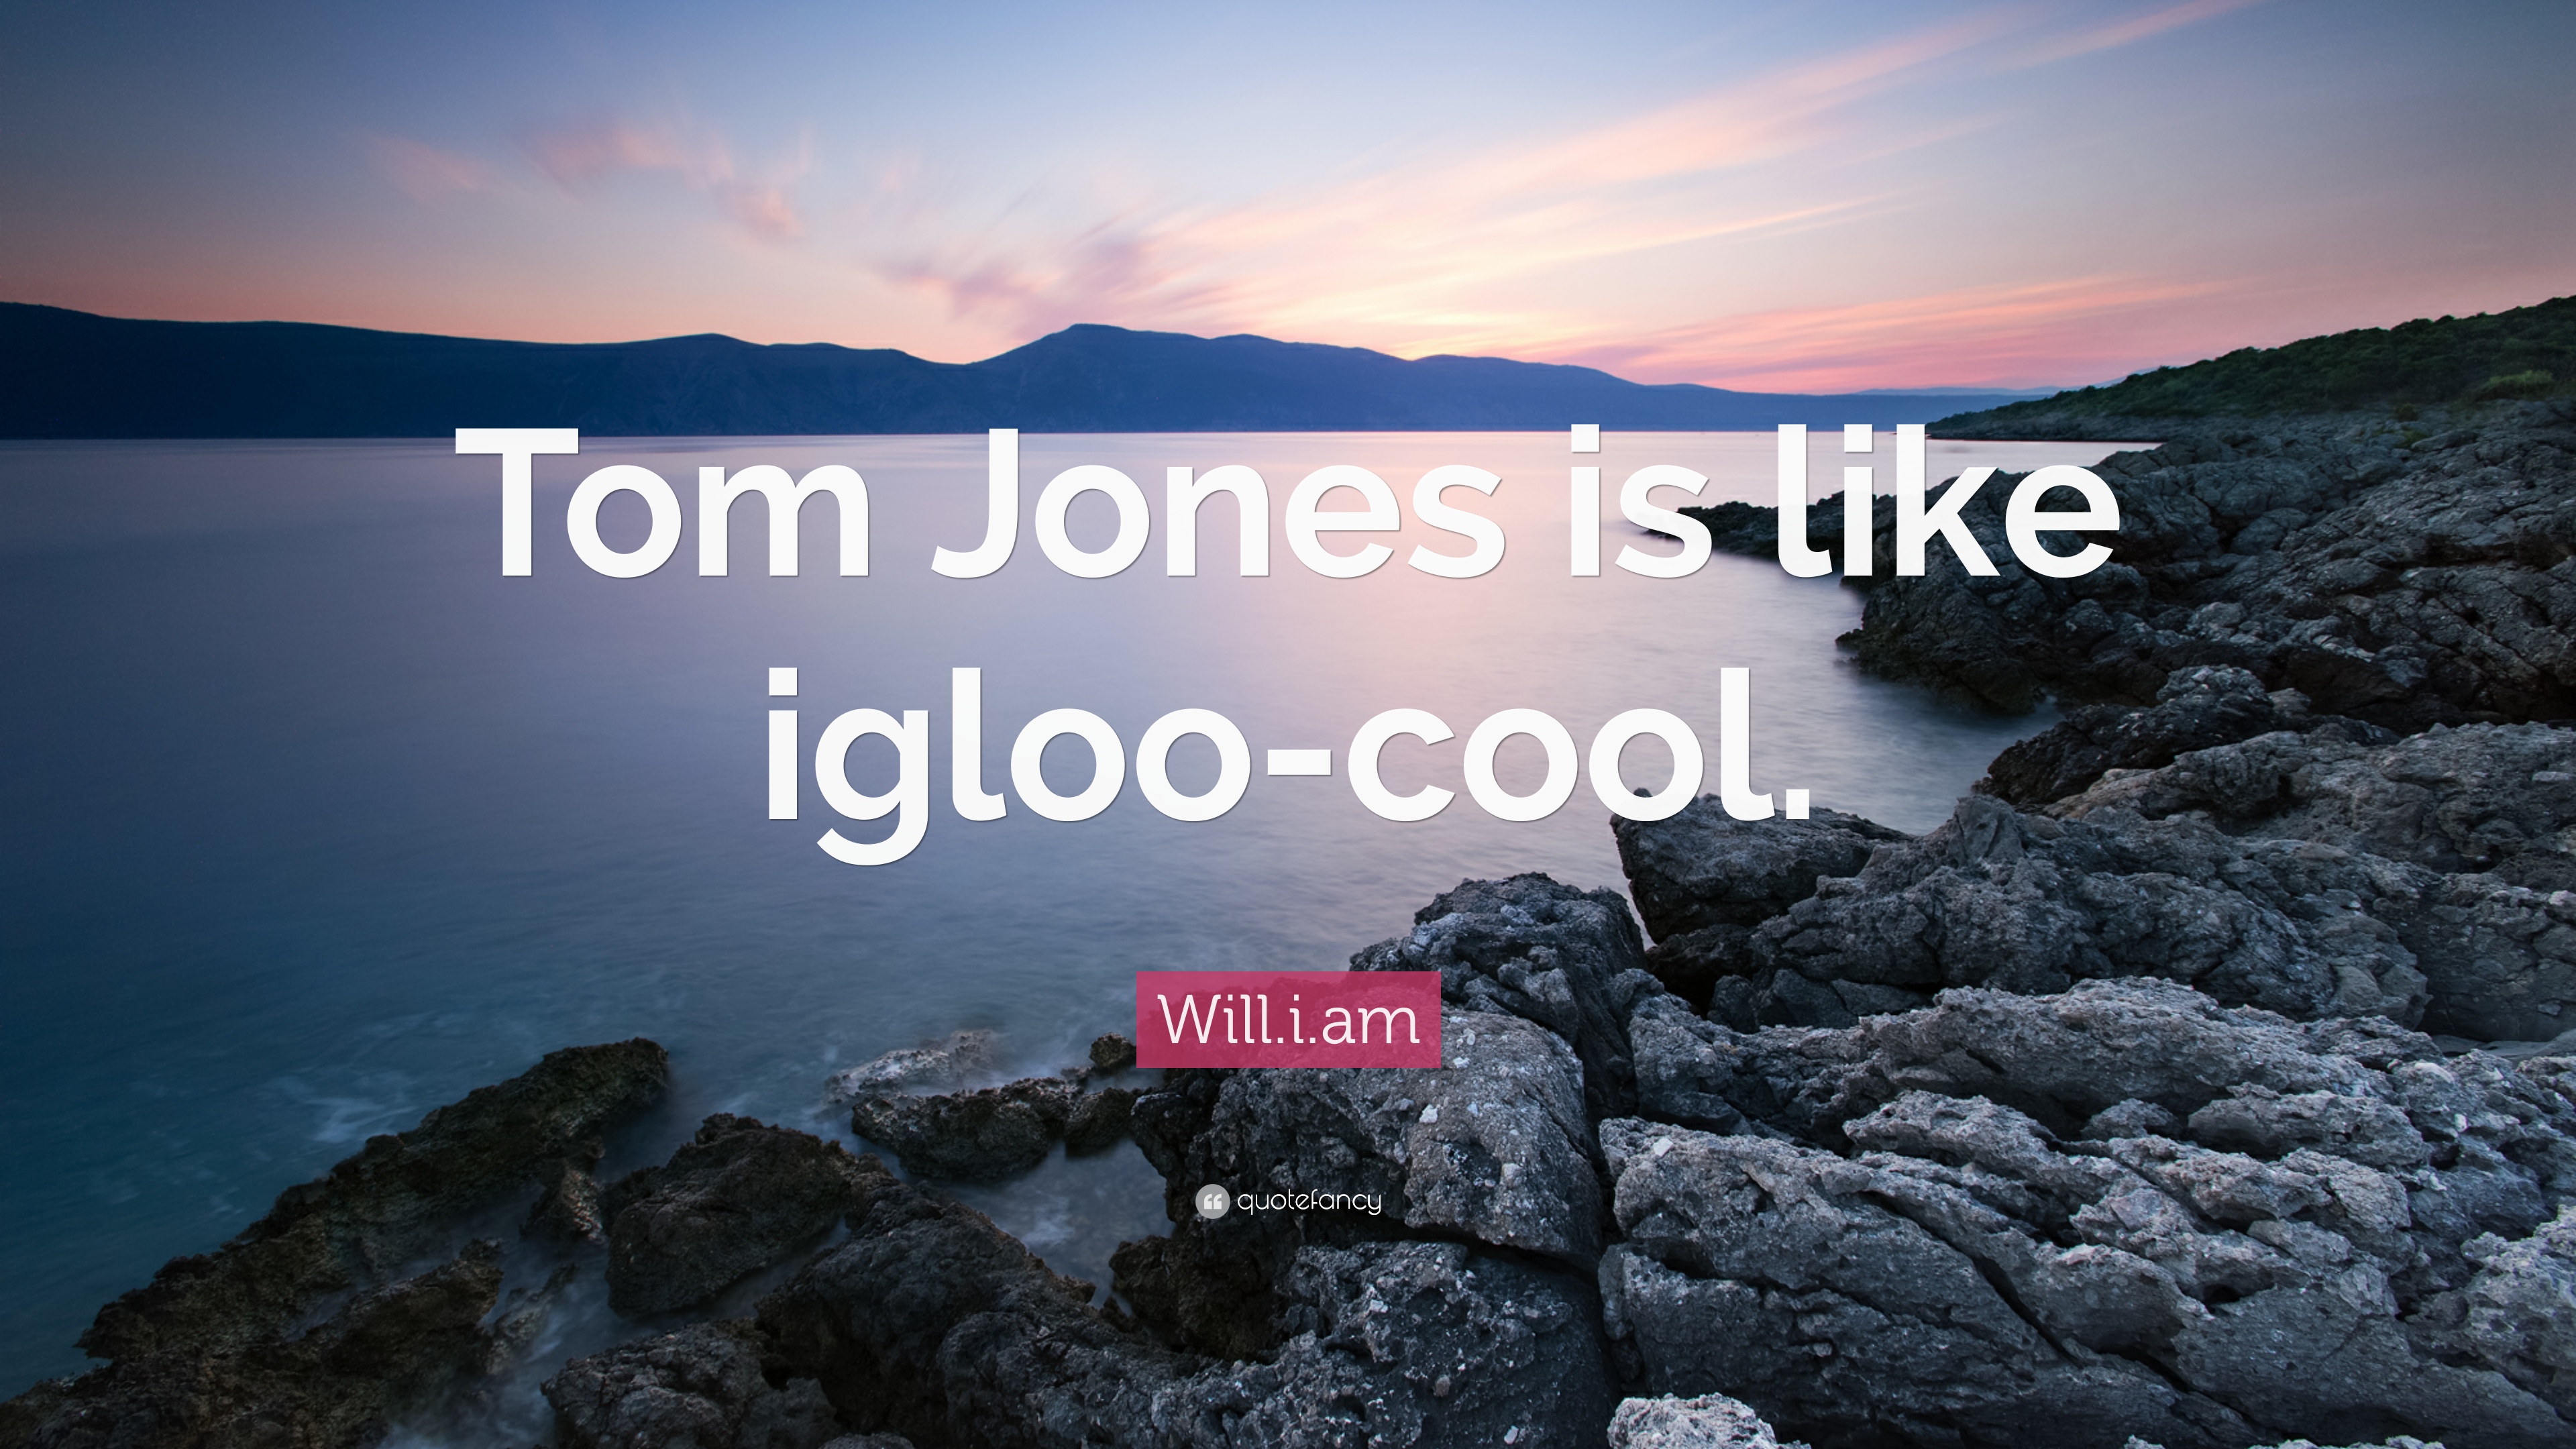 Will.i.am Quote: “Tom Jones Is Like Igloo Cool.” 7